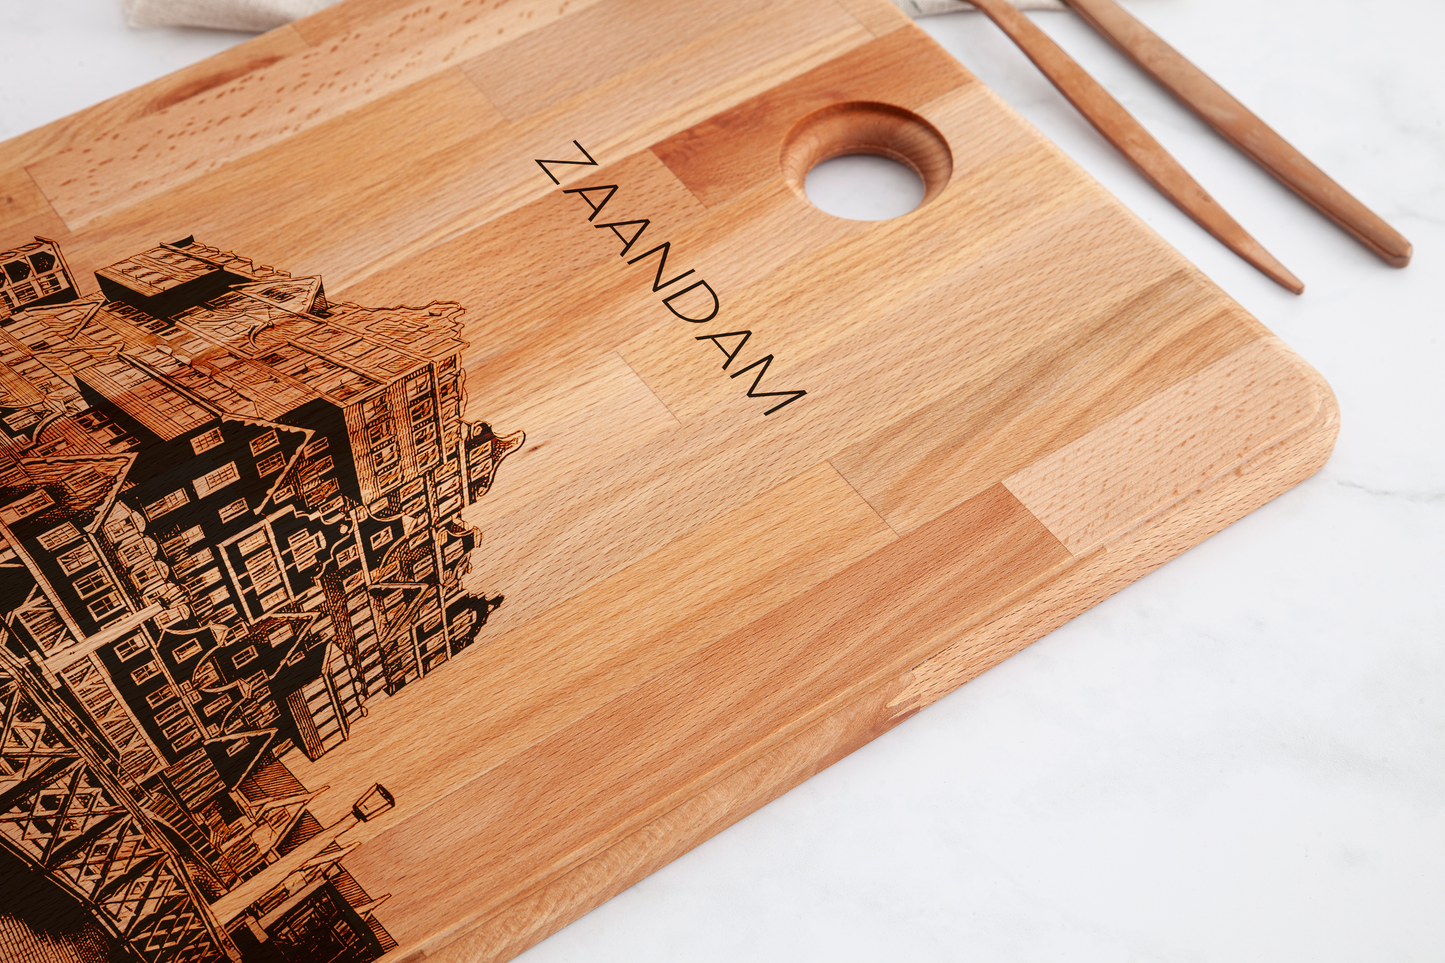 Zaandam, Houses, cutting board, wood grain